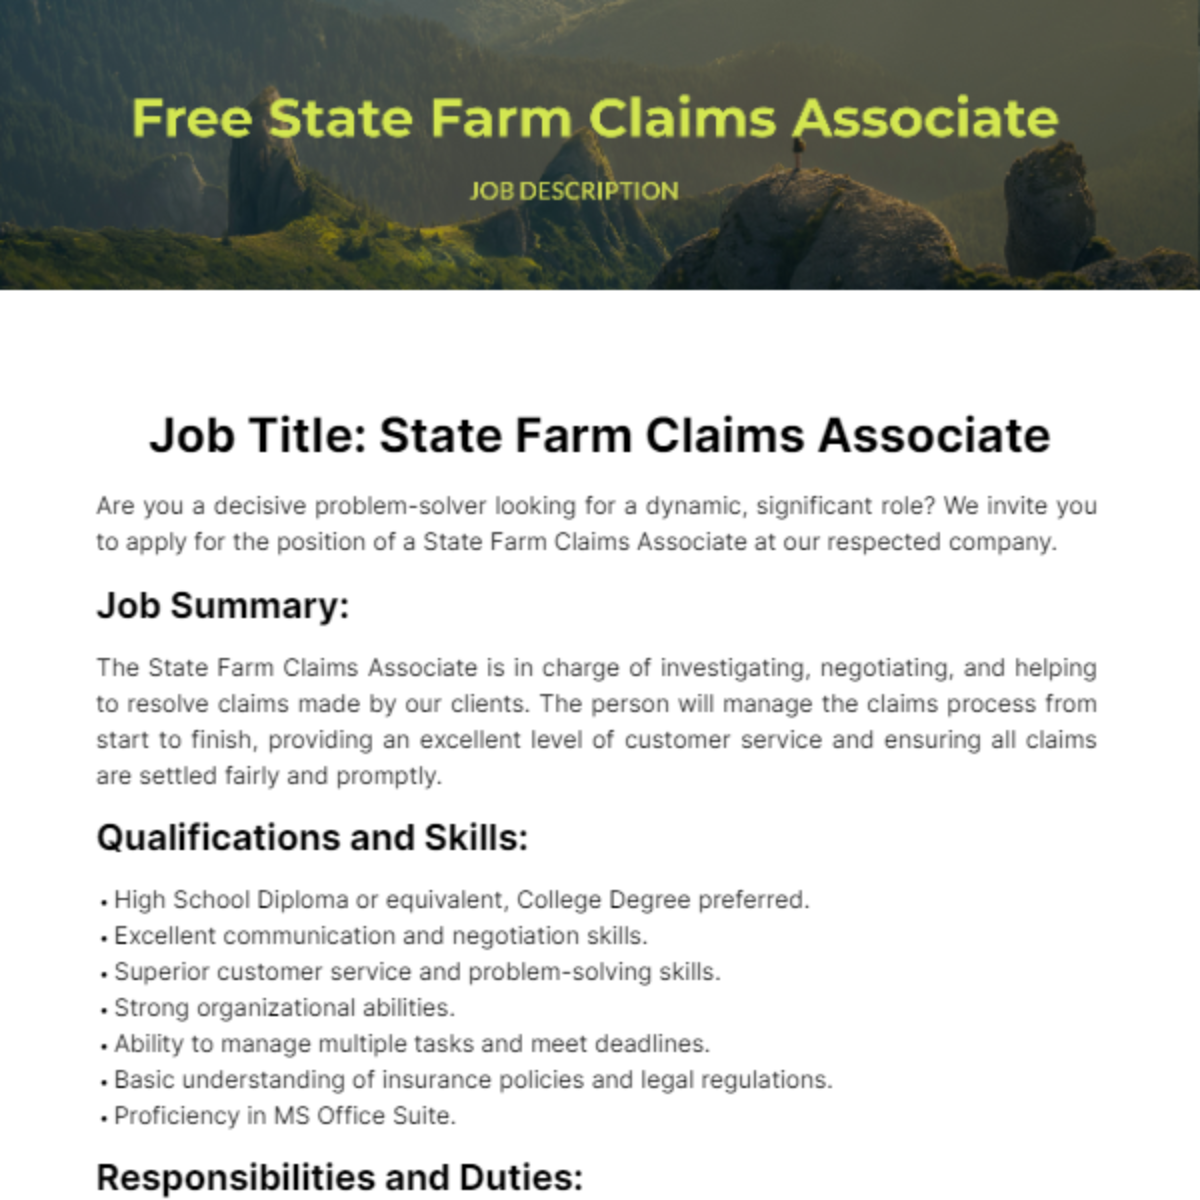 State Farm Claims Associate Job Description Template